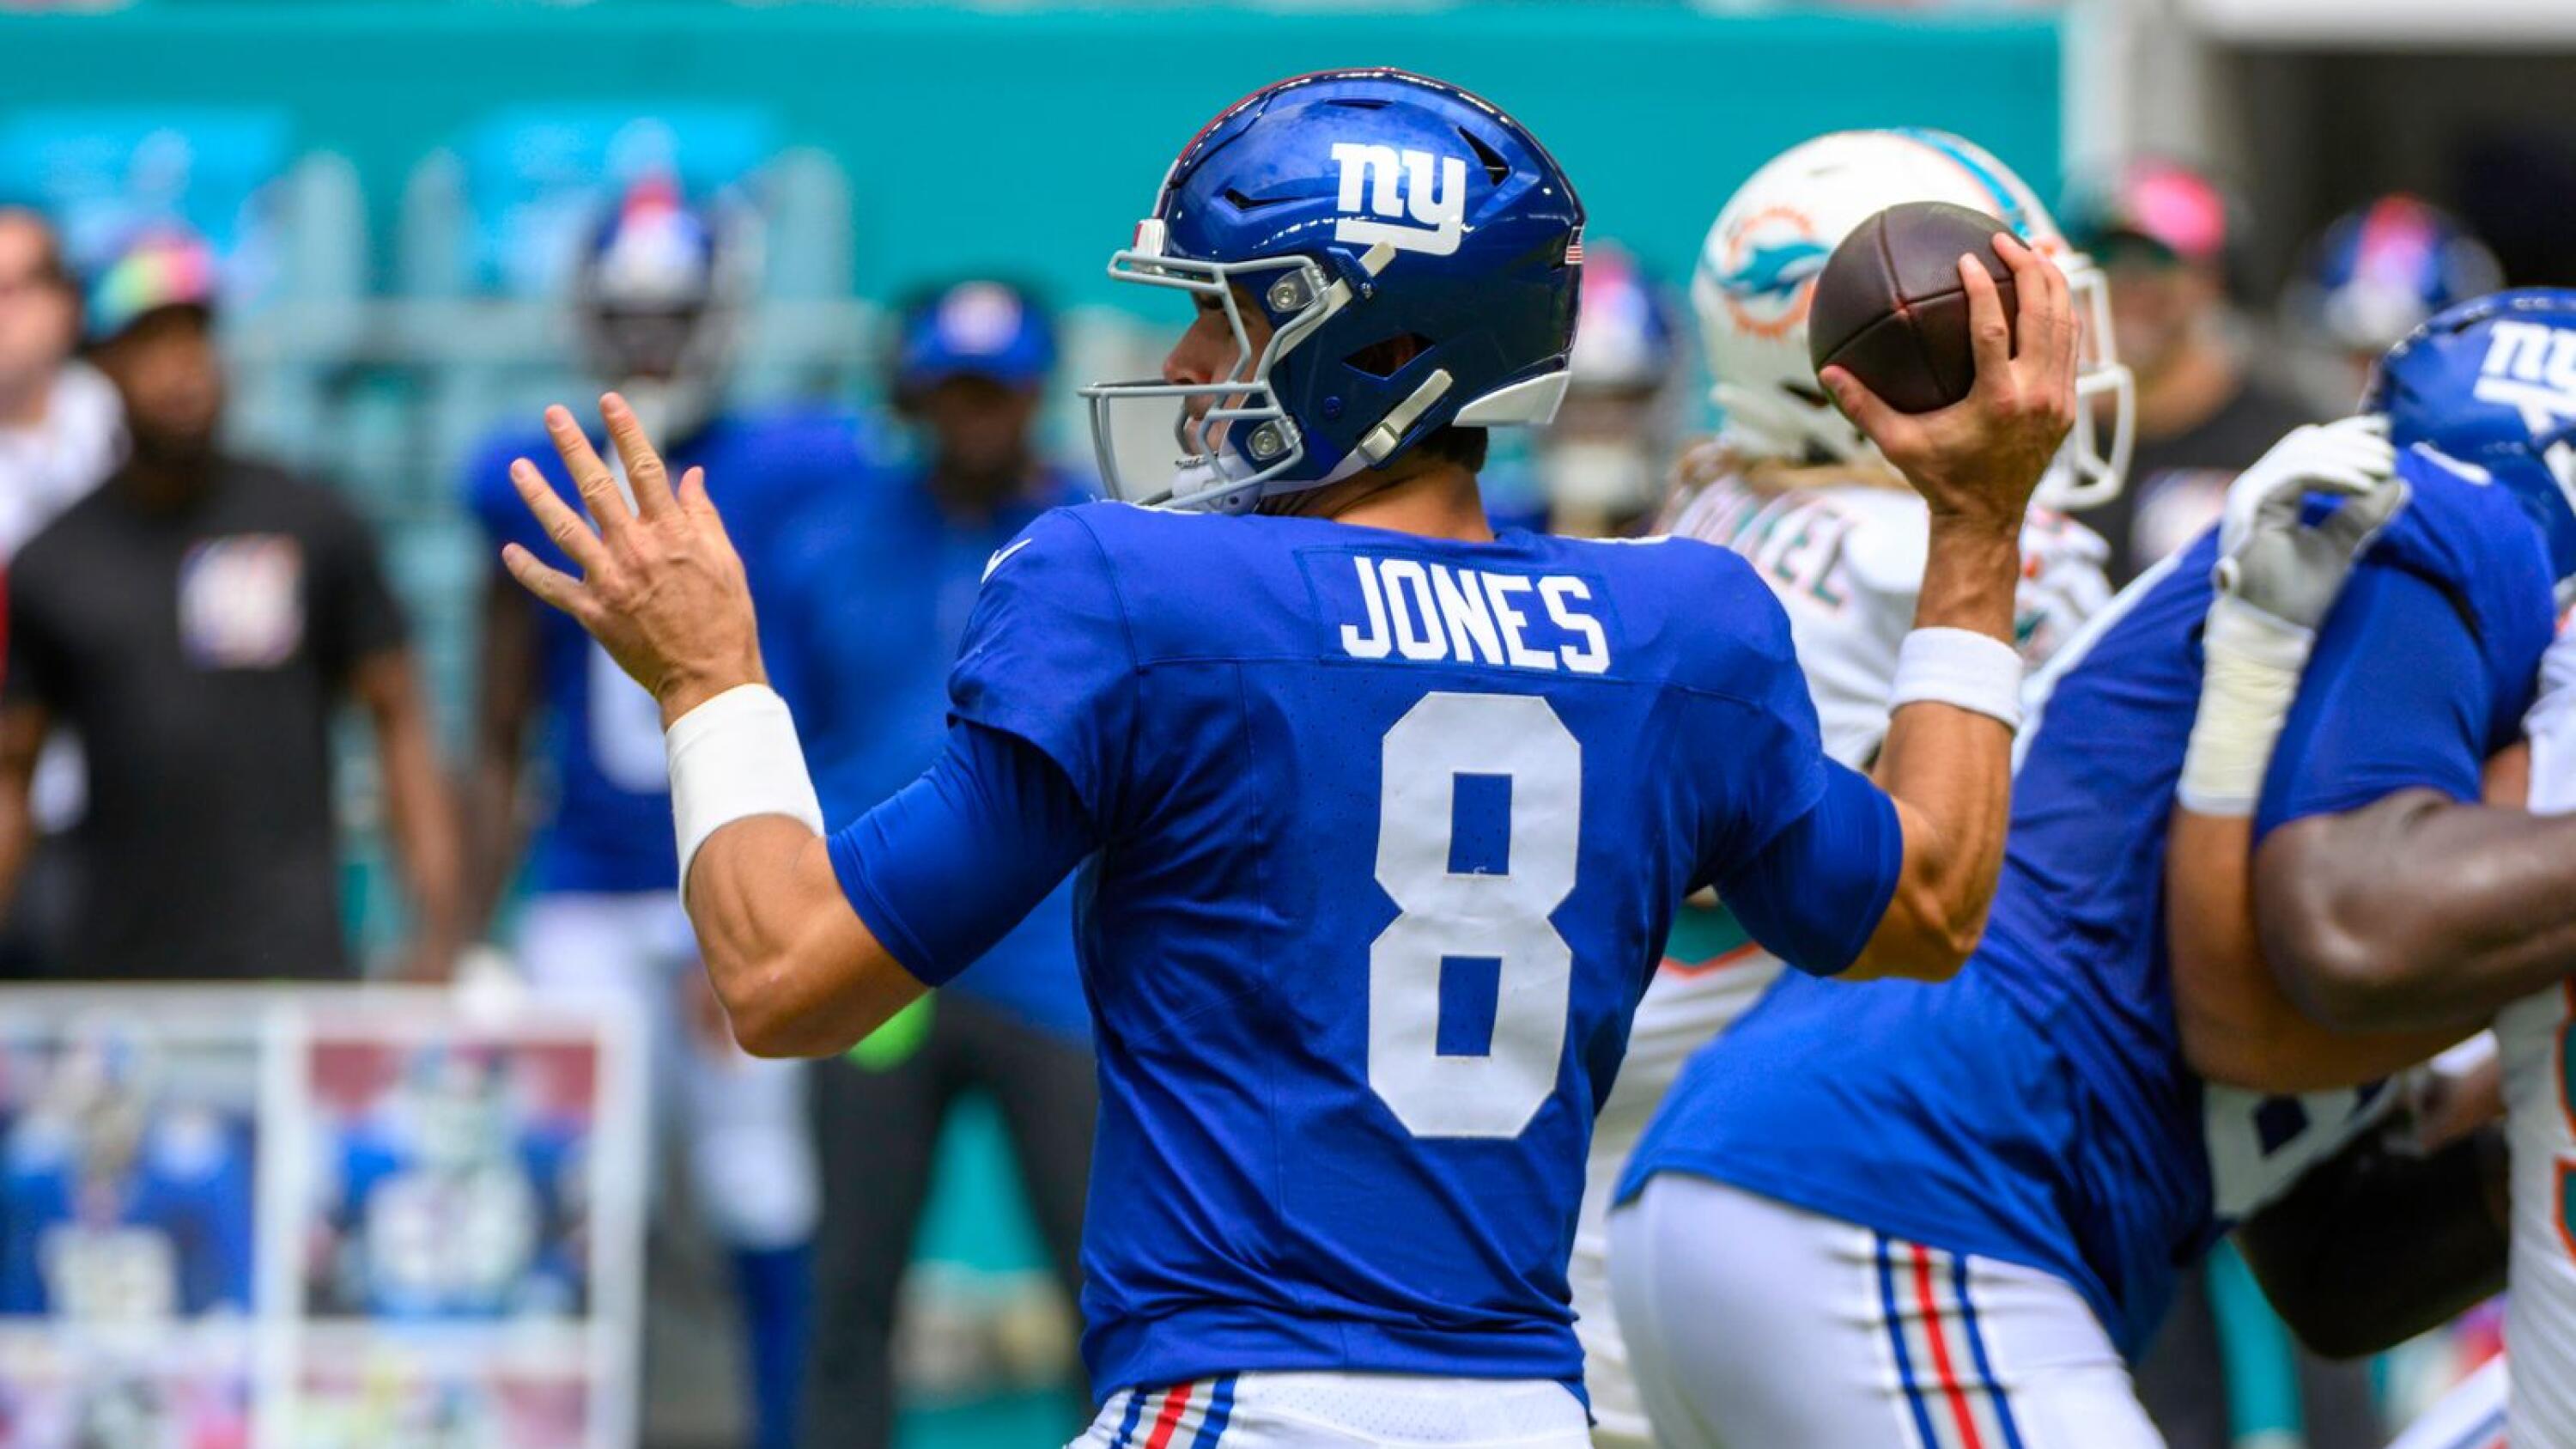 Giants quarterback Daniel Jones misses his second straight